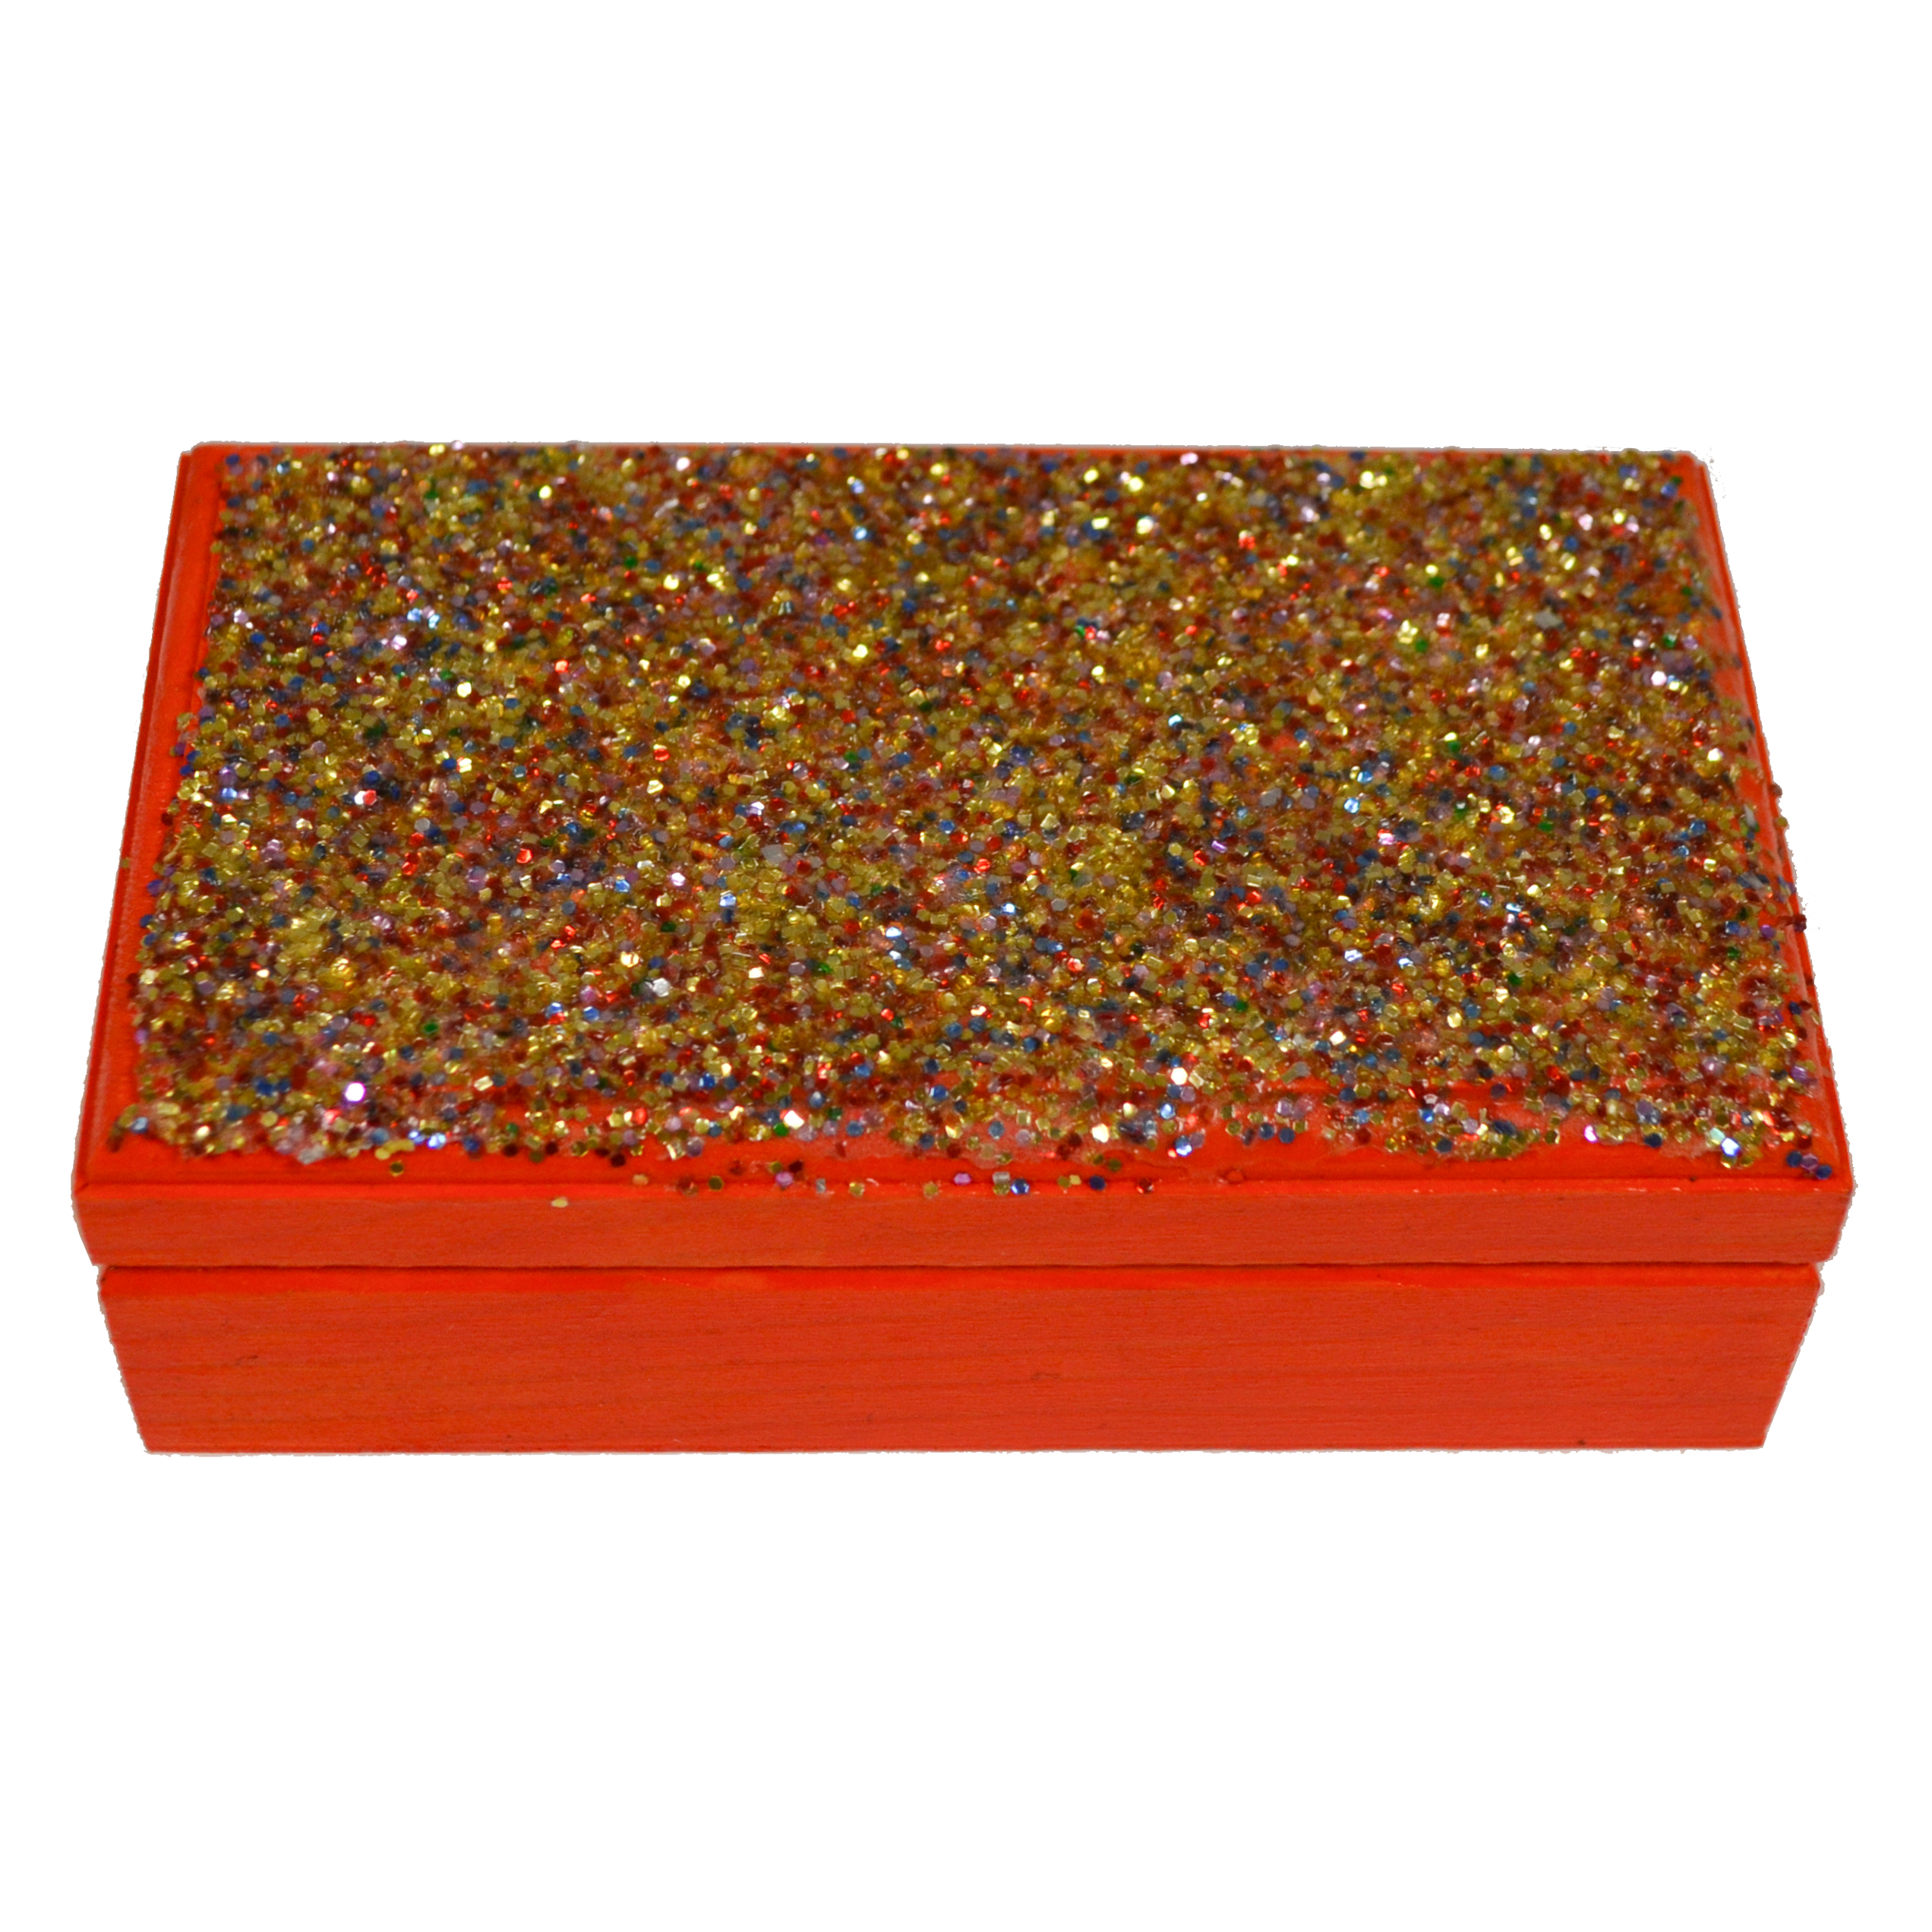 Orange box with glitter by Andrew Granger